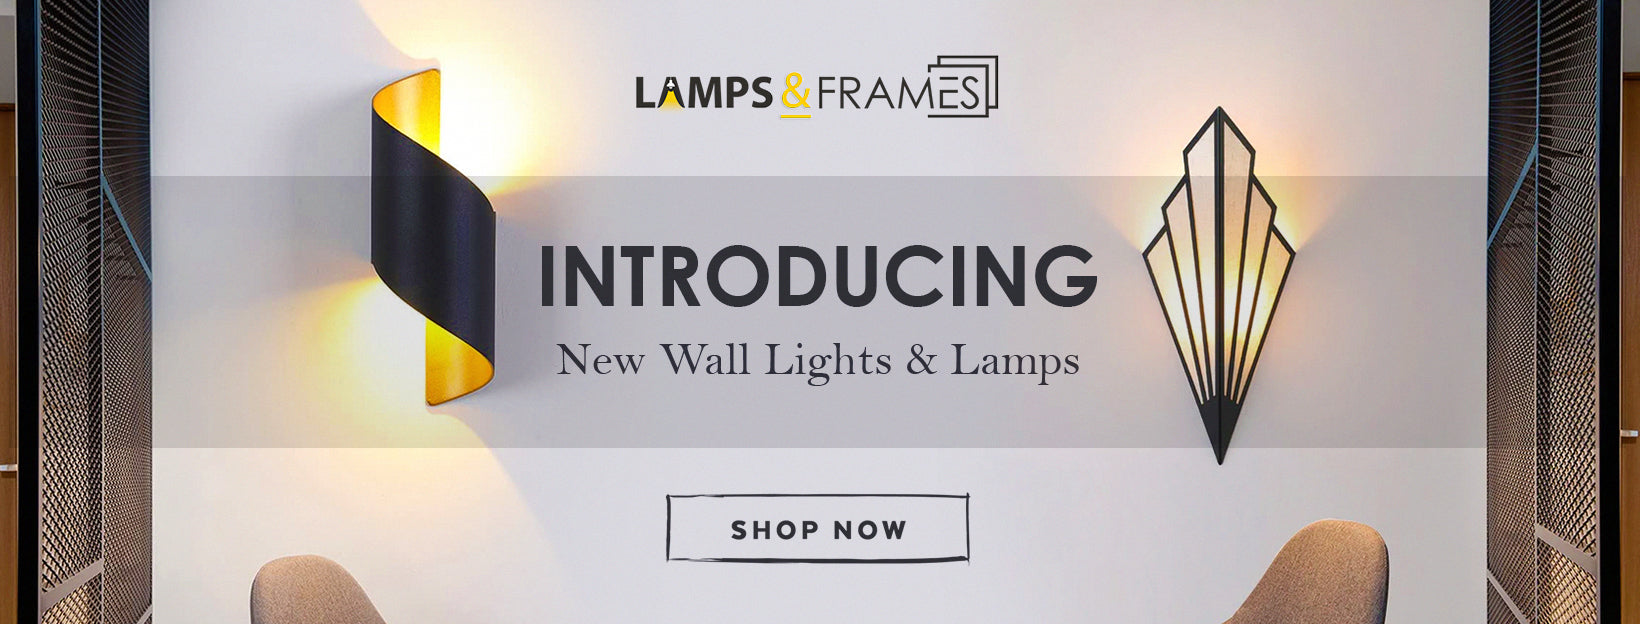 Lamps & Frames